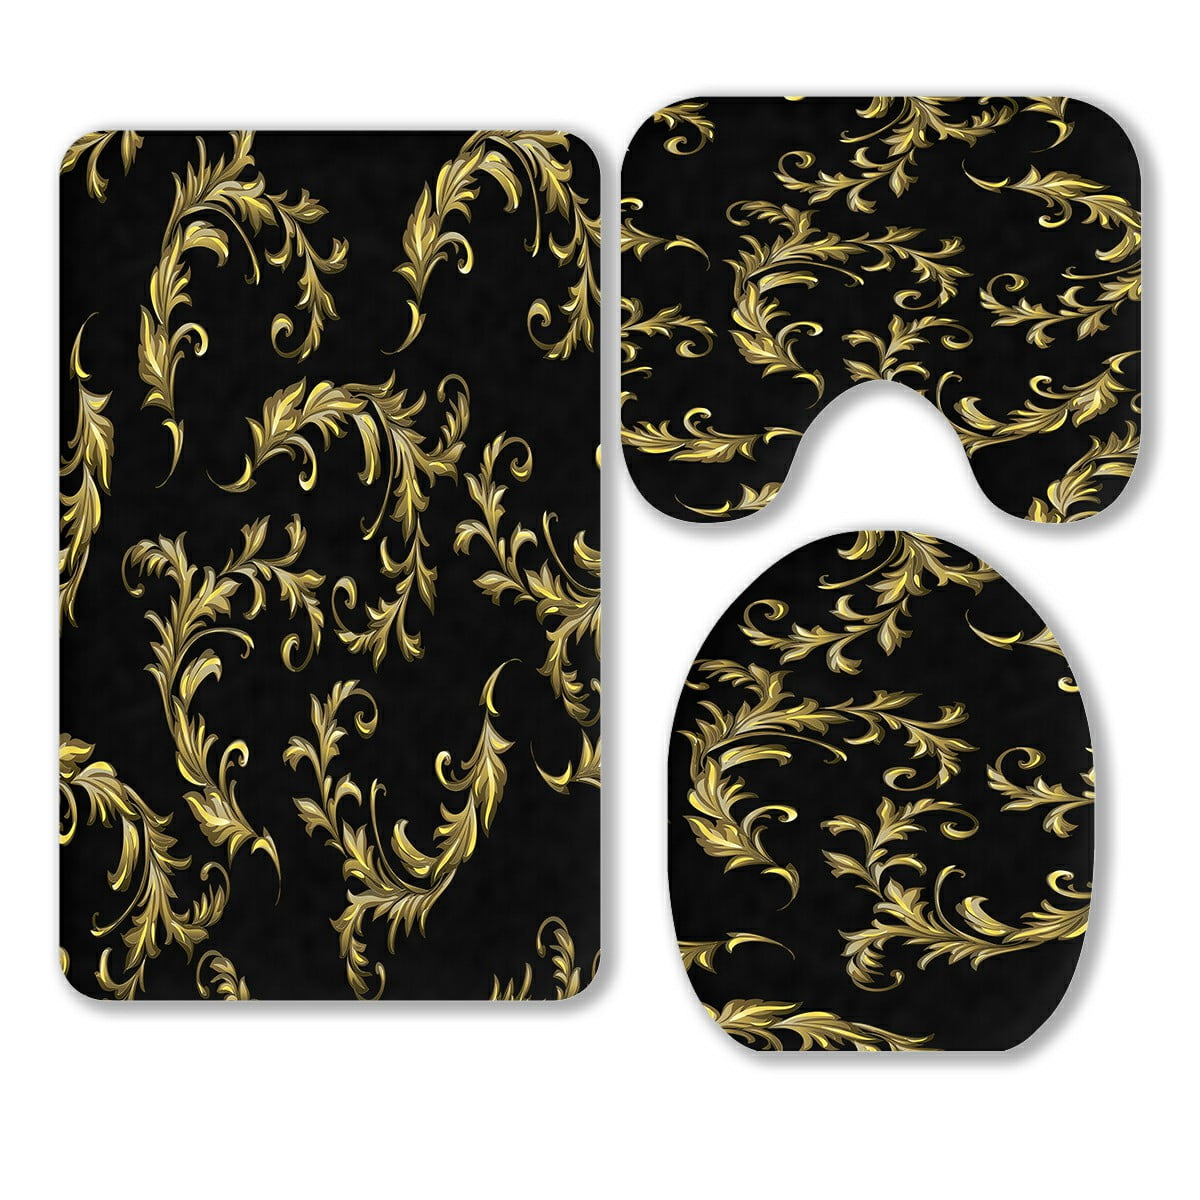 ABPHQTO Baroque Gold Scrolls Black 3 Piece Bathroom Rugs